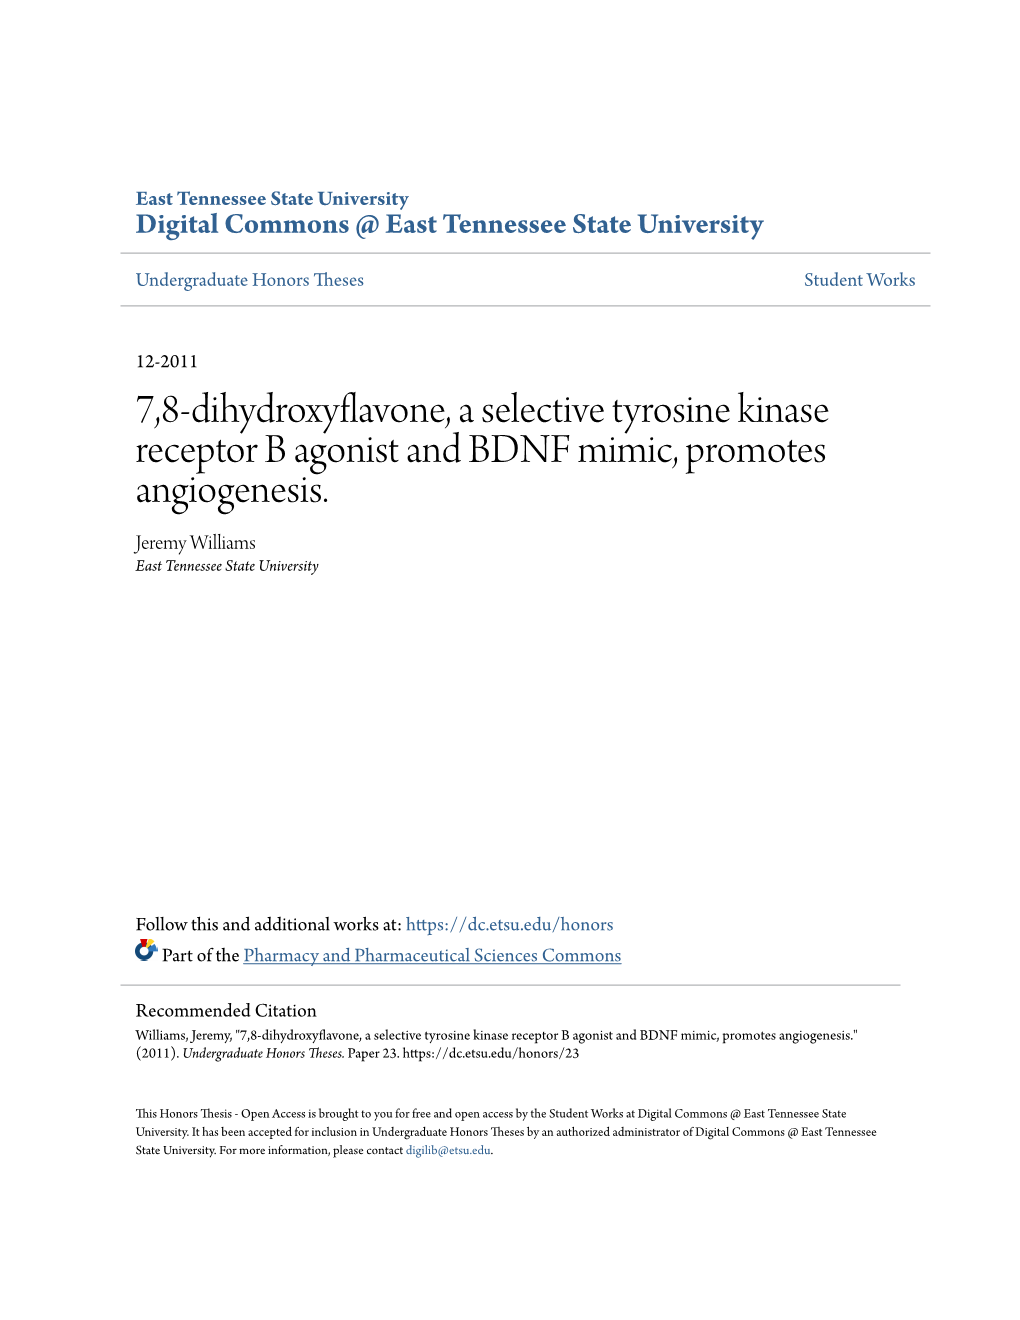 7,8-Dihydroxyflavone, a Selective Tyrosine Kinase Receptor B Agonist and BDNF Mimic, Promotes Angiogenesis